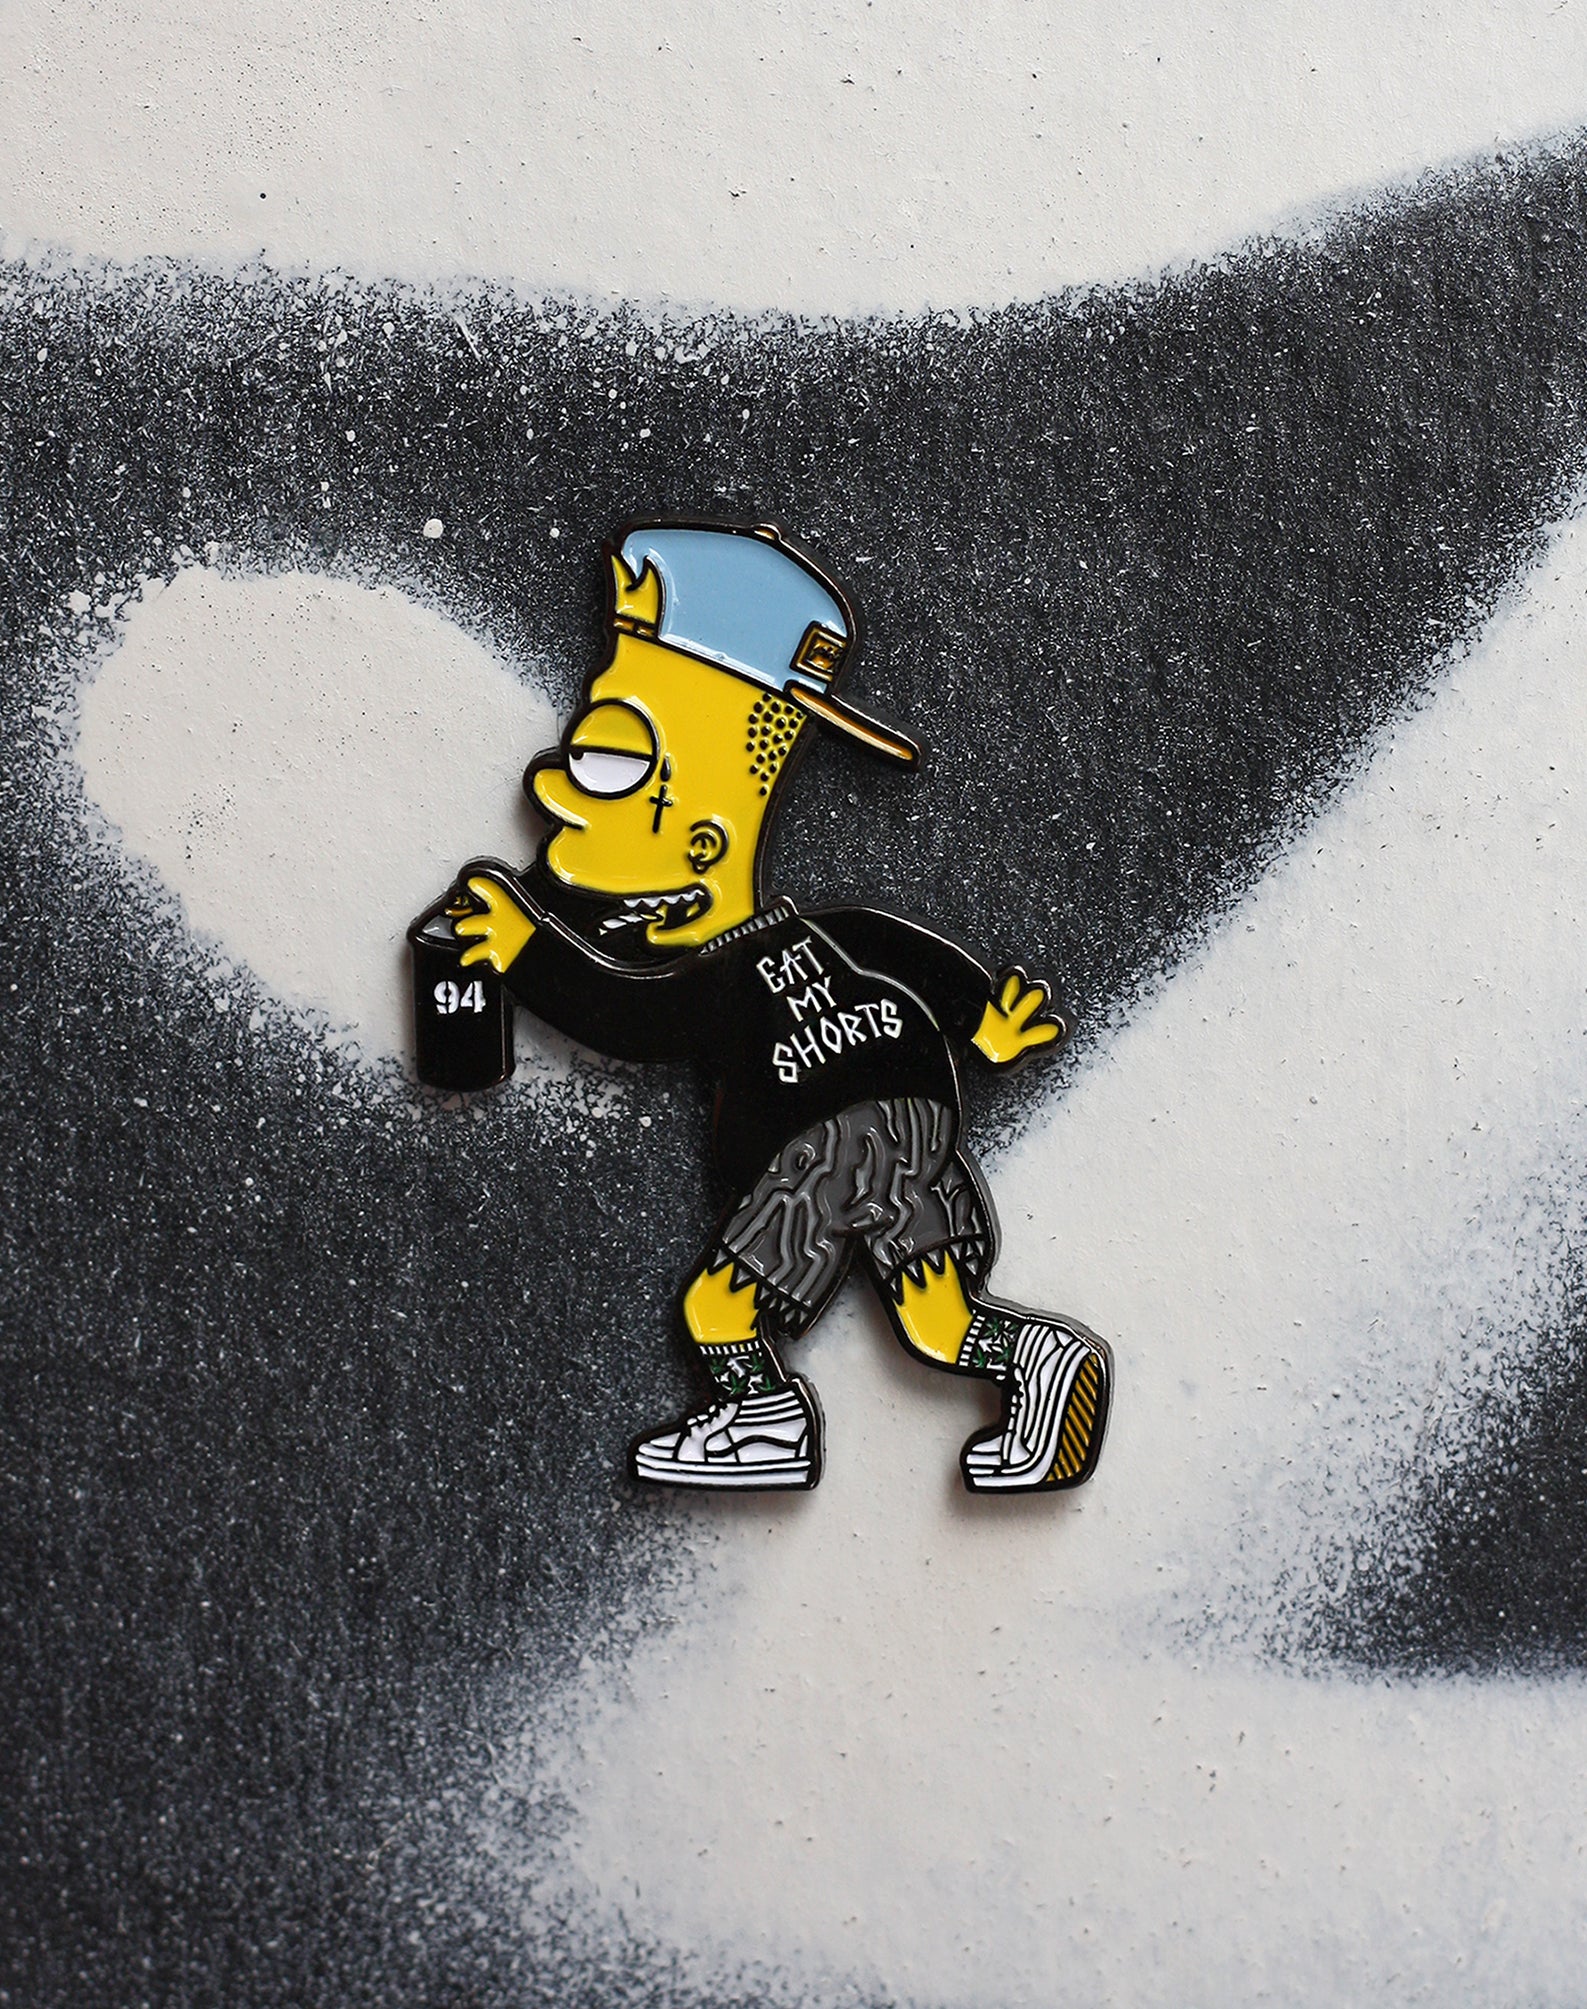 Bart simpson parody enamel pin badge eat my shorts 94 Montana grafitti 